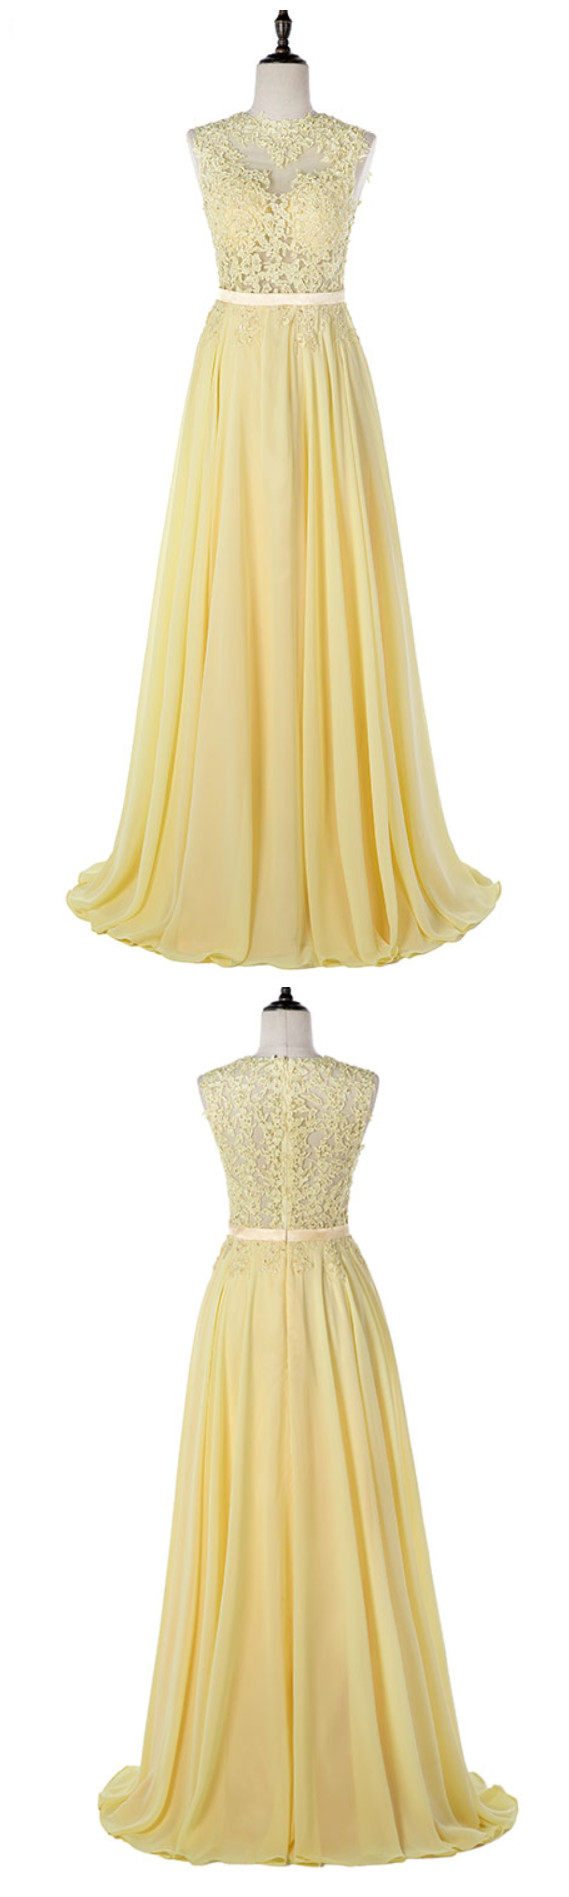 Stylish Dress Yellow Long Prom Dresses Lace Chiffon Evening Gown Vestido De Festa